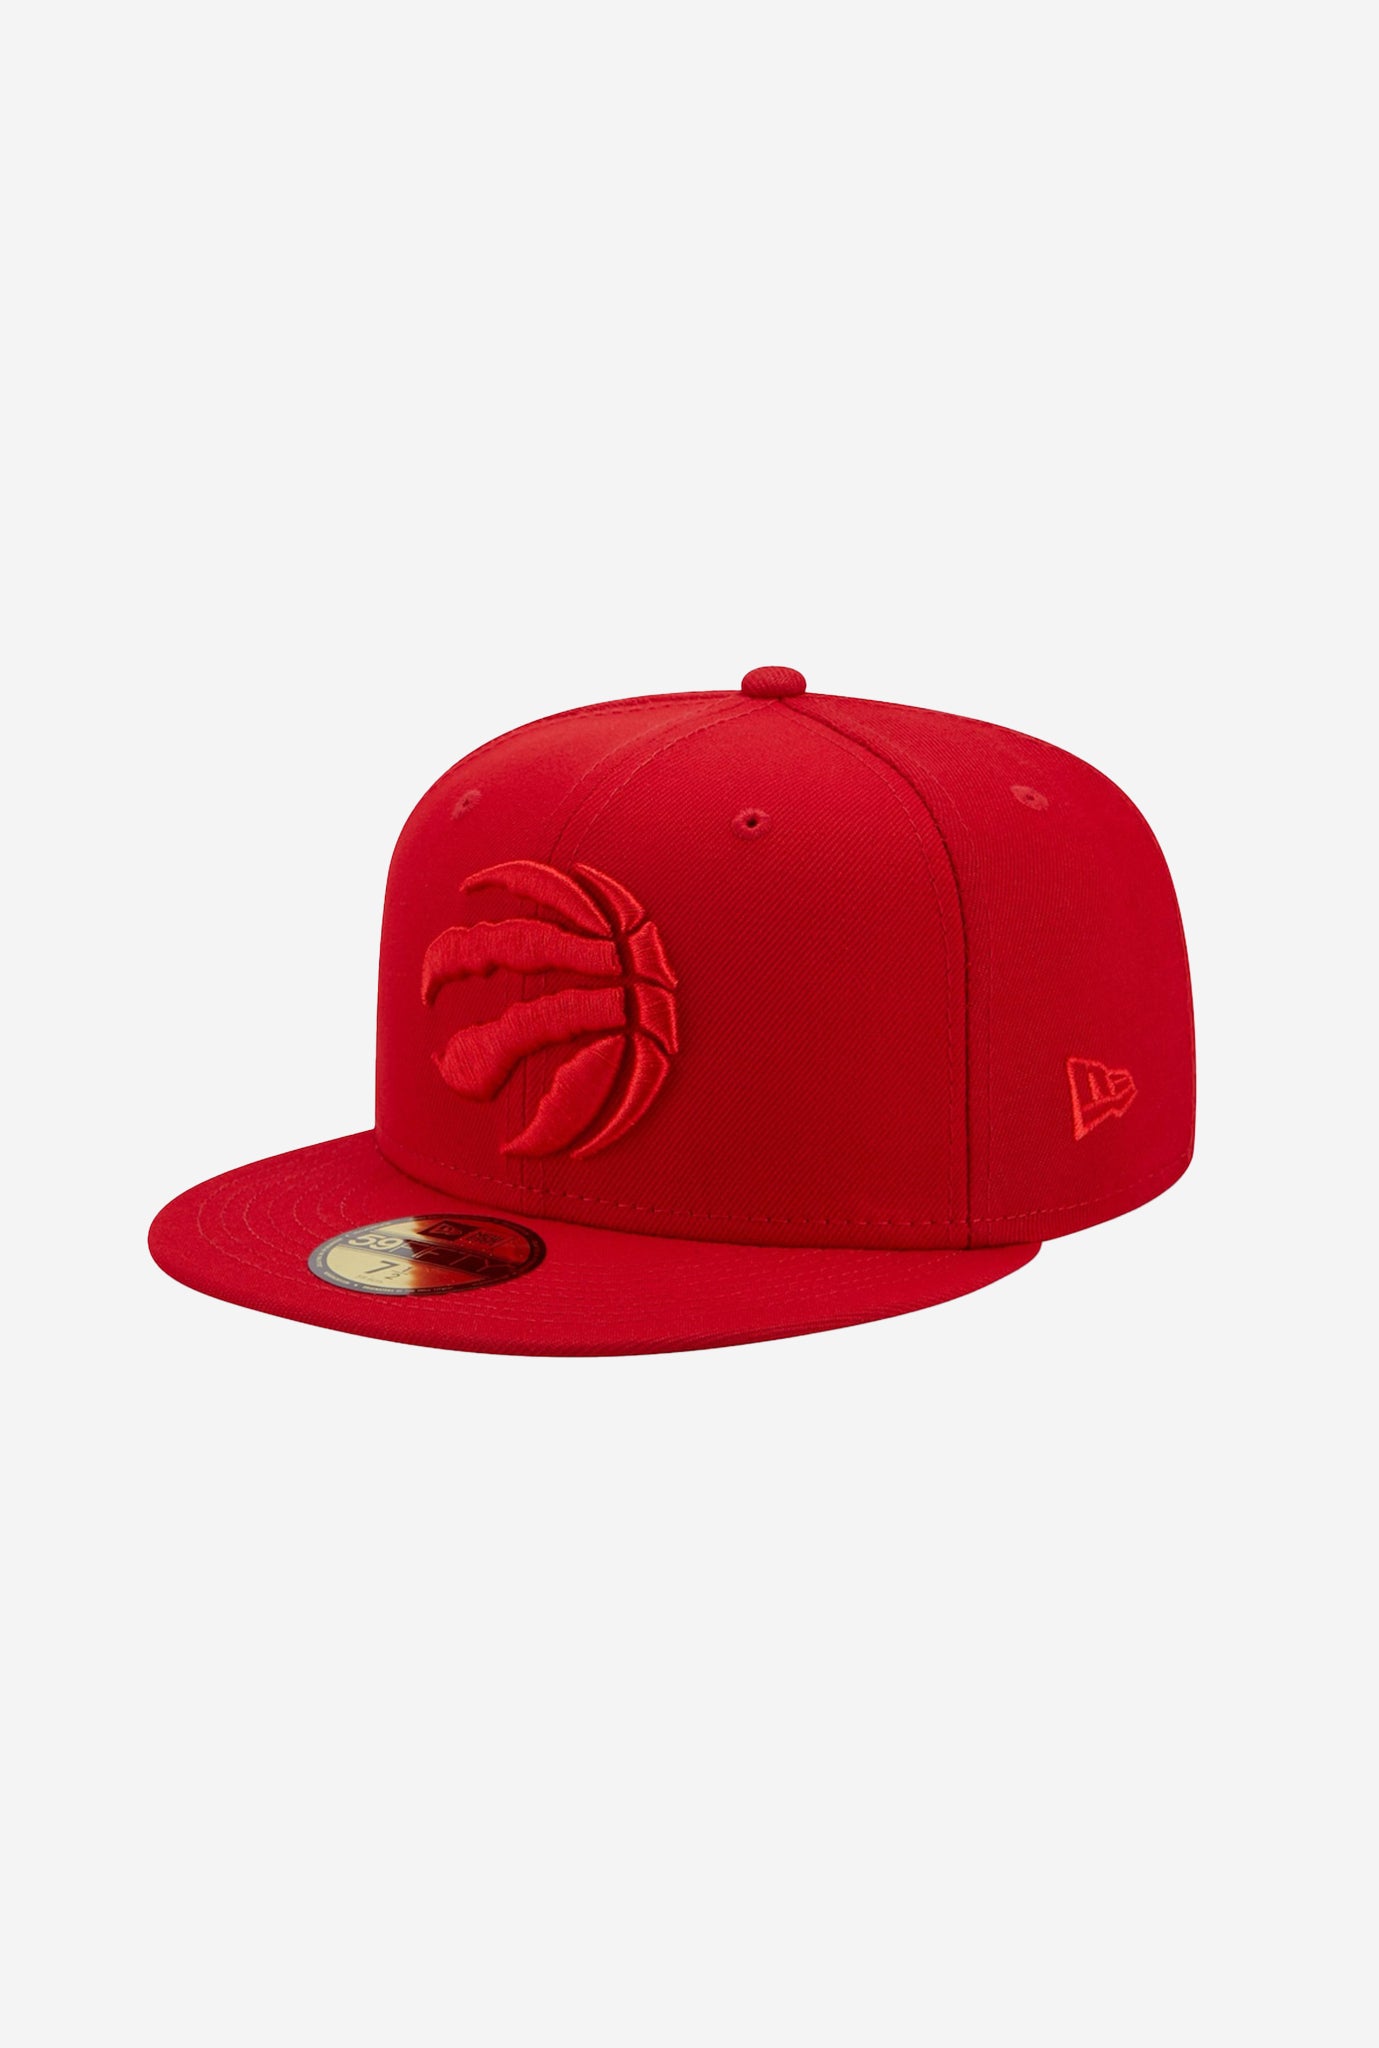 Toronto Raptors 9FIFTY Color Pack Snapback - Red